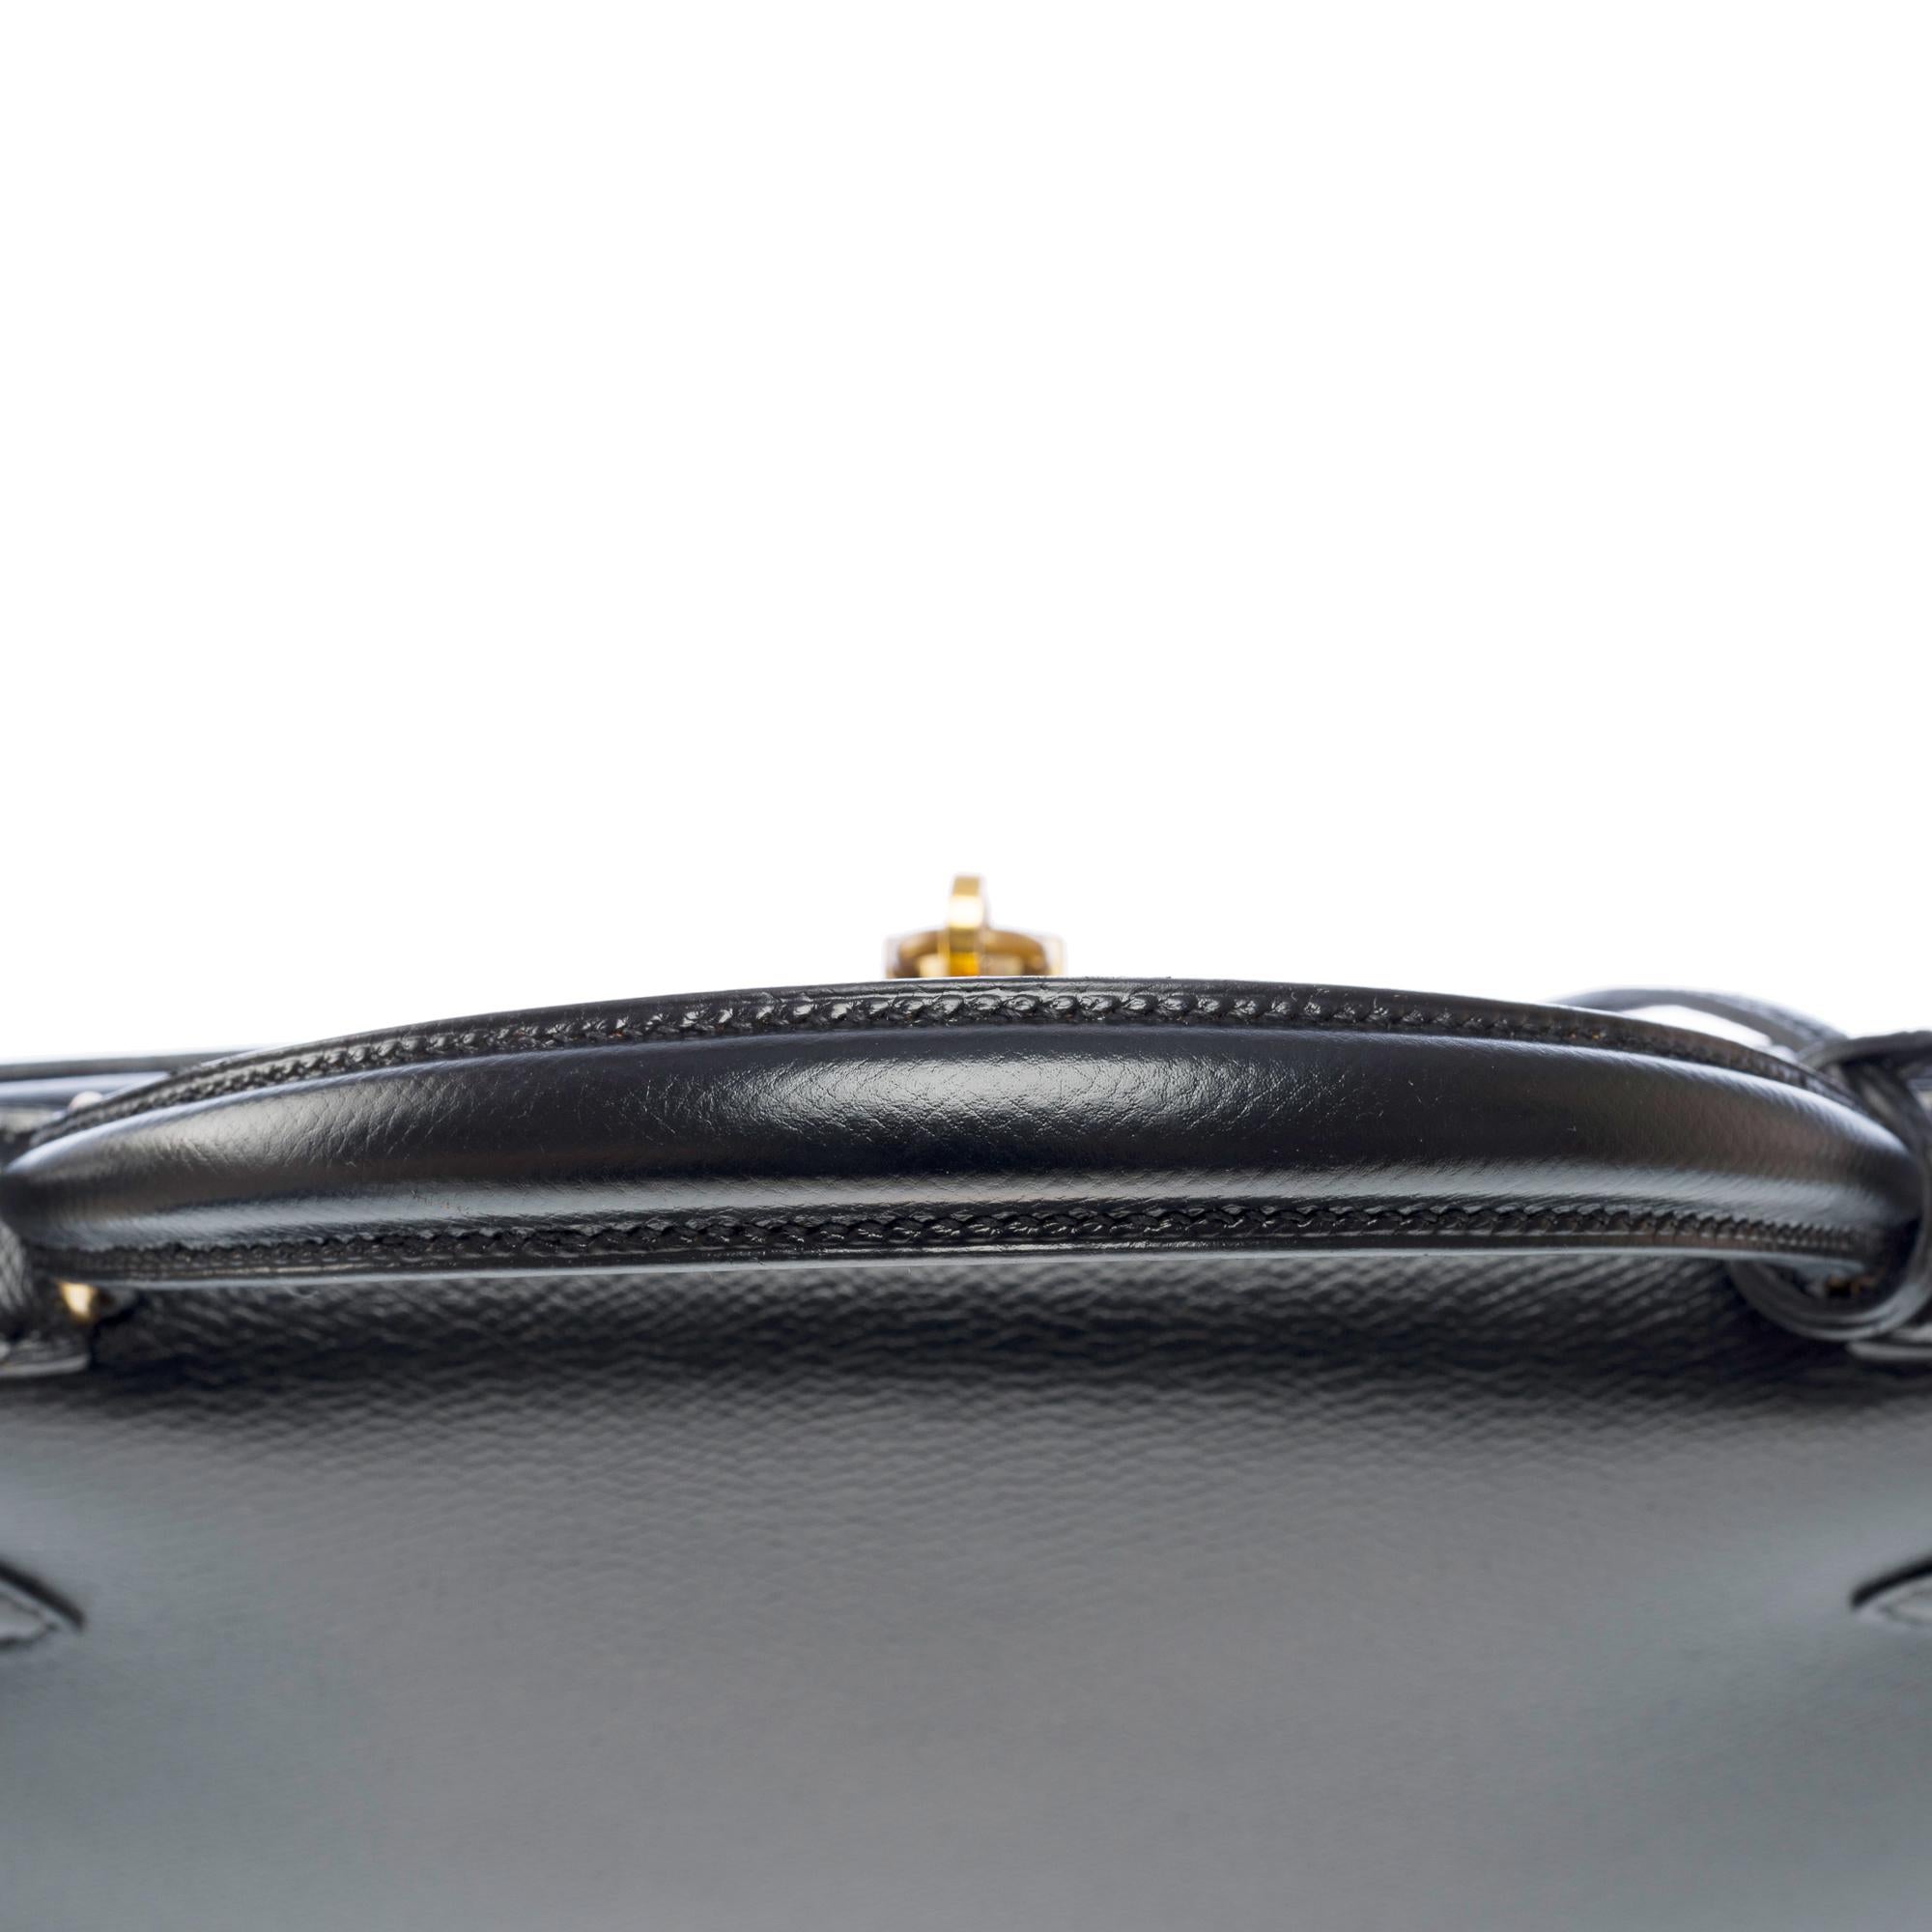 Vintage Hermès Kelly 32 sellier handbag strap in Black Courchevel leather, GHW 5